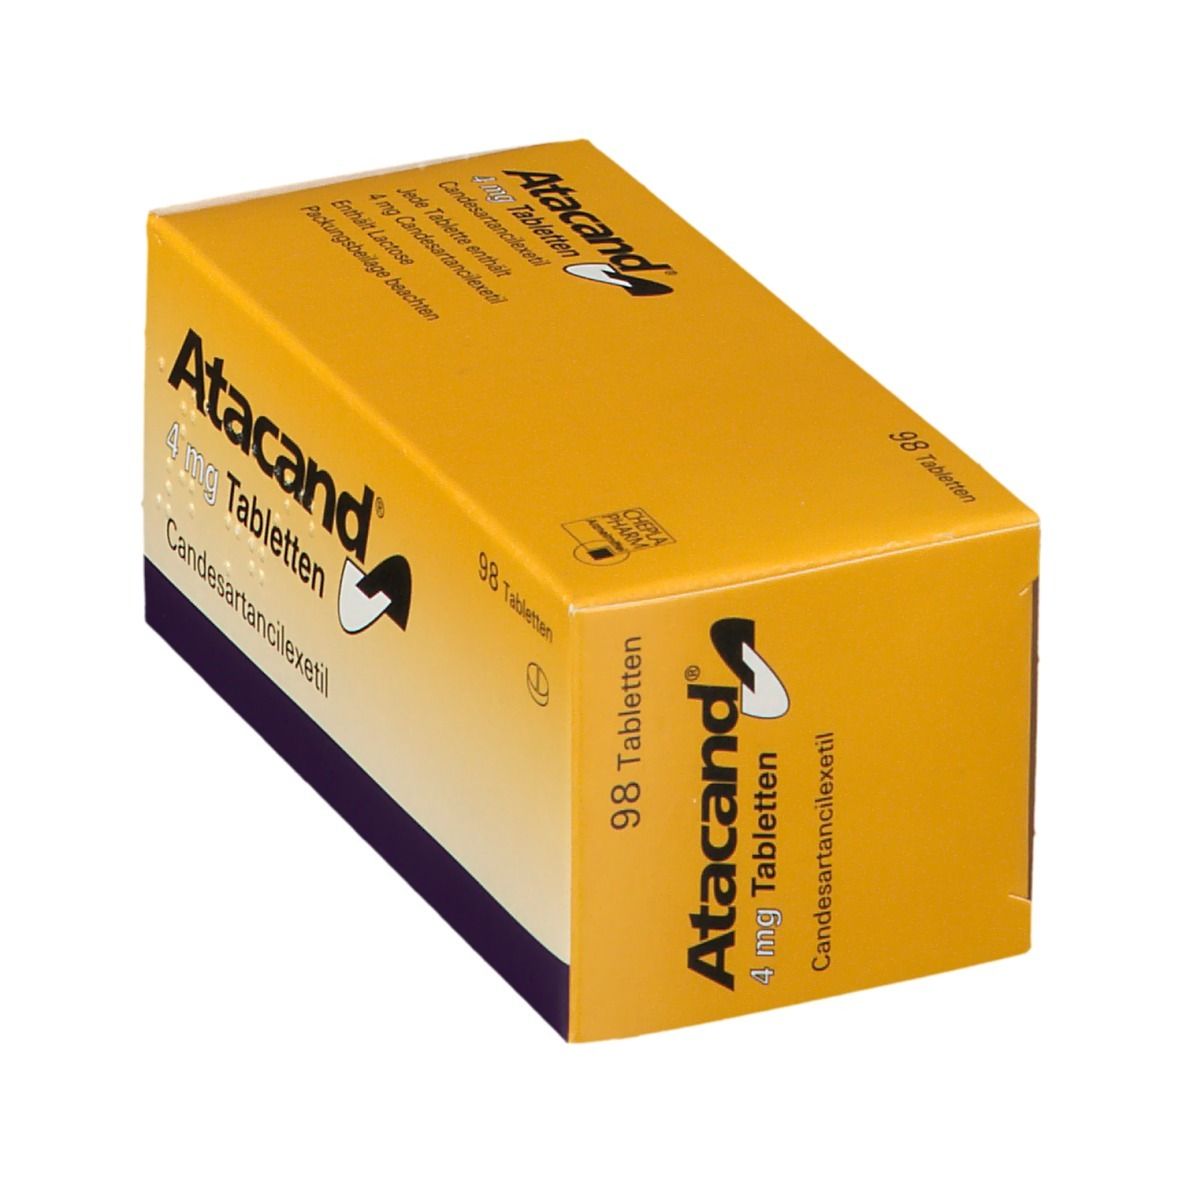 Atacand® 4 mg